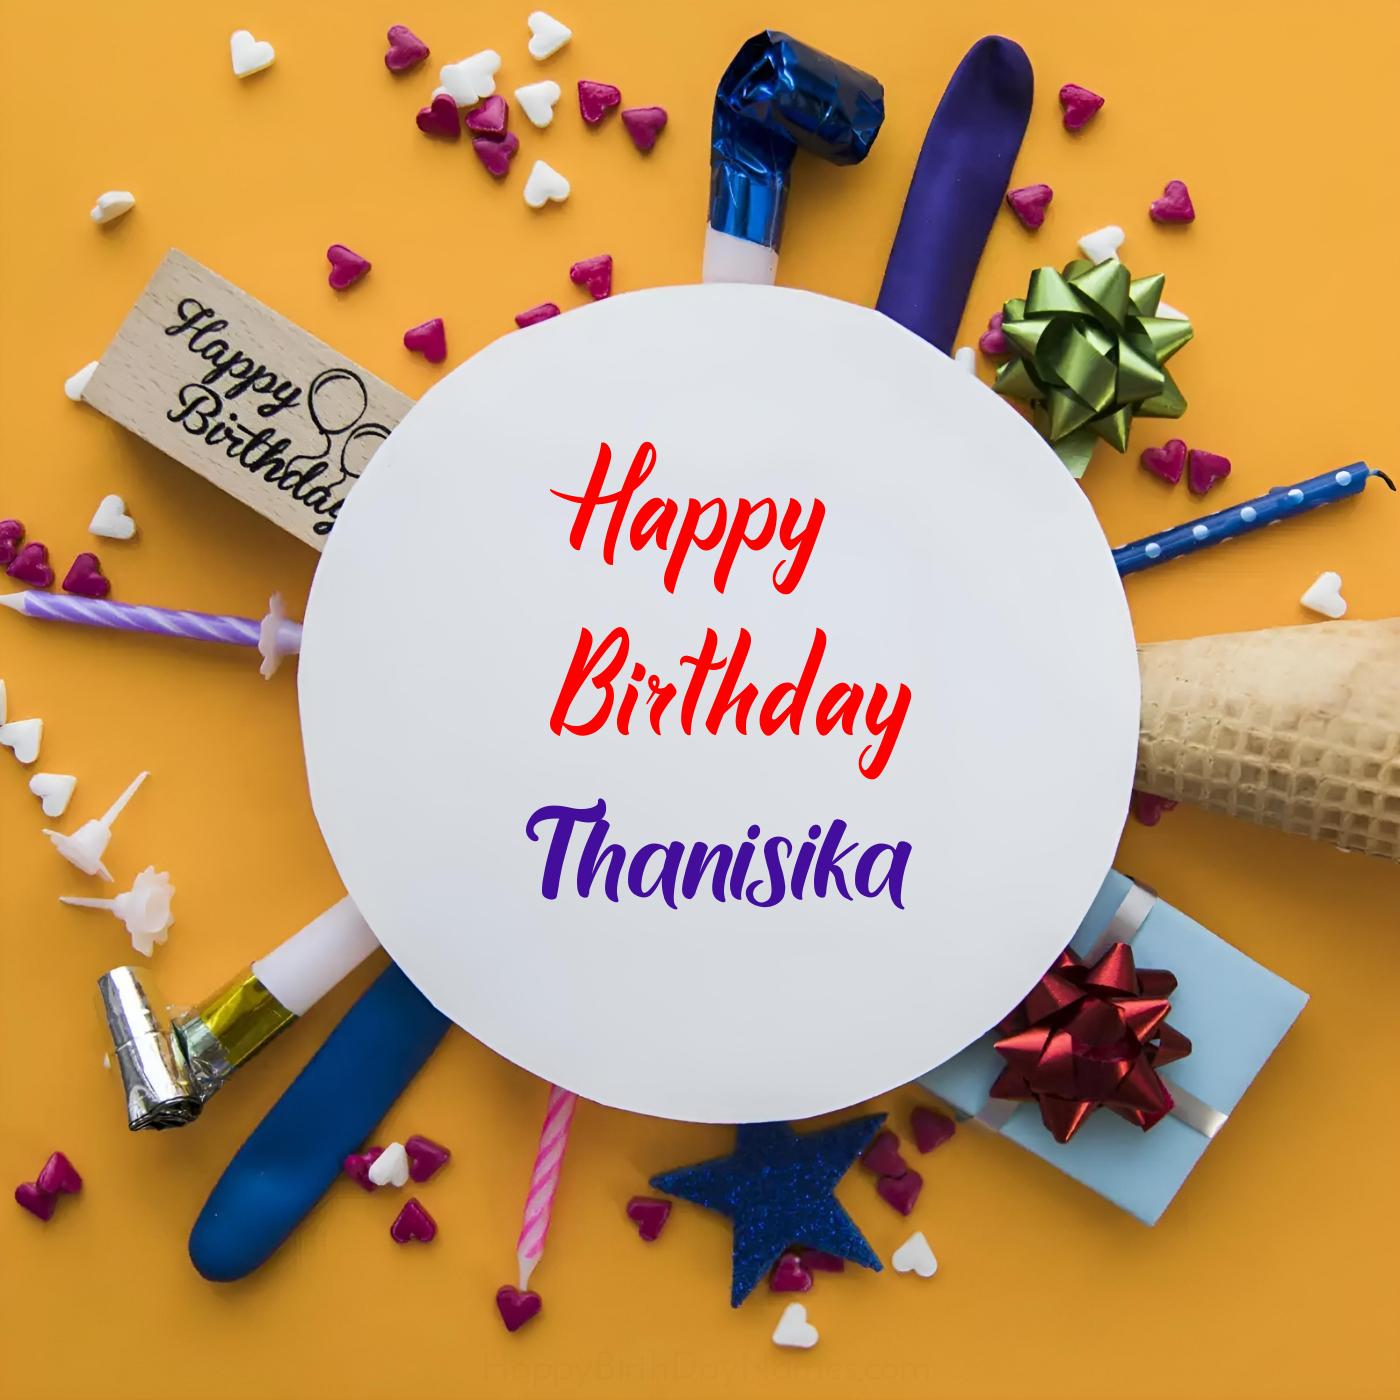 Happy Birthday Thanisika Round Frame Card